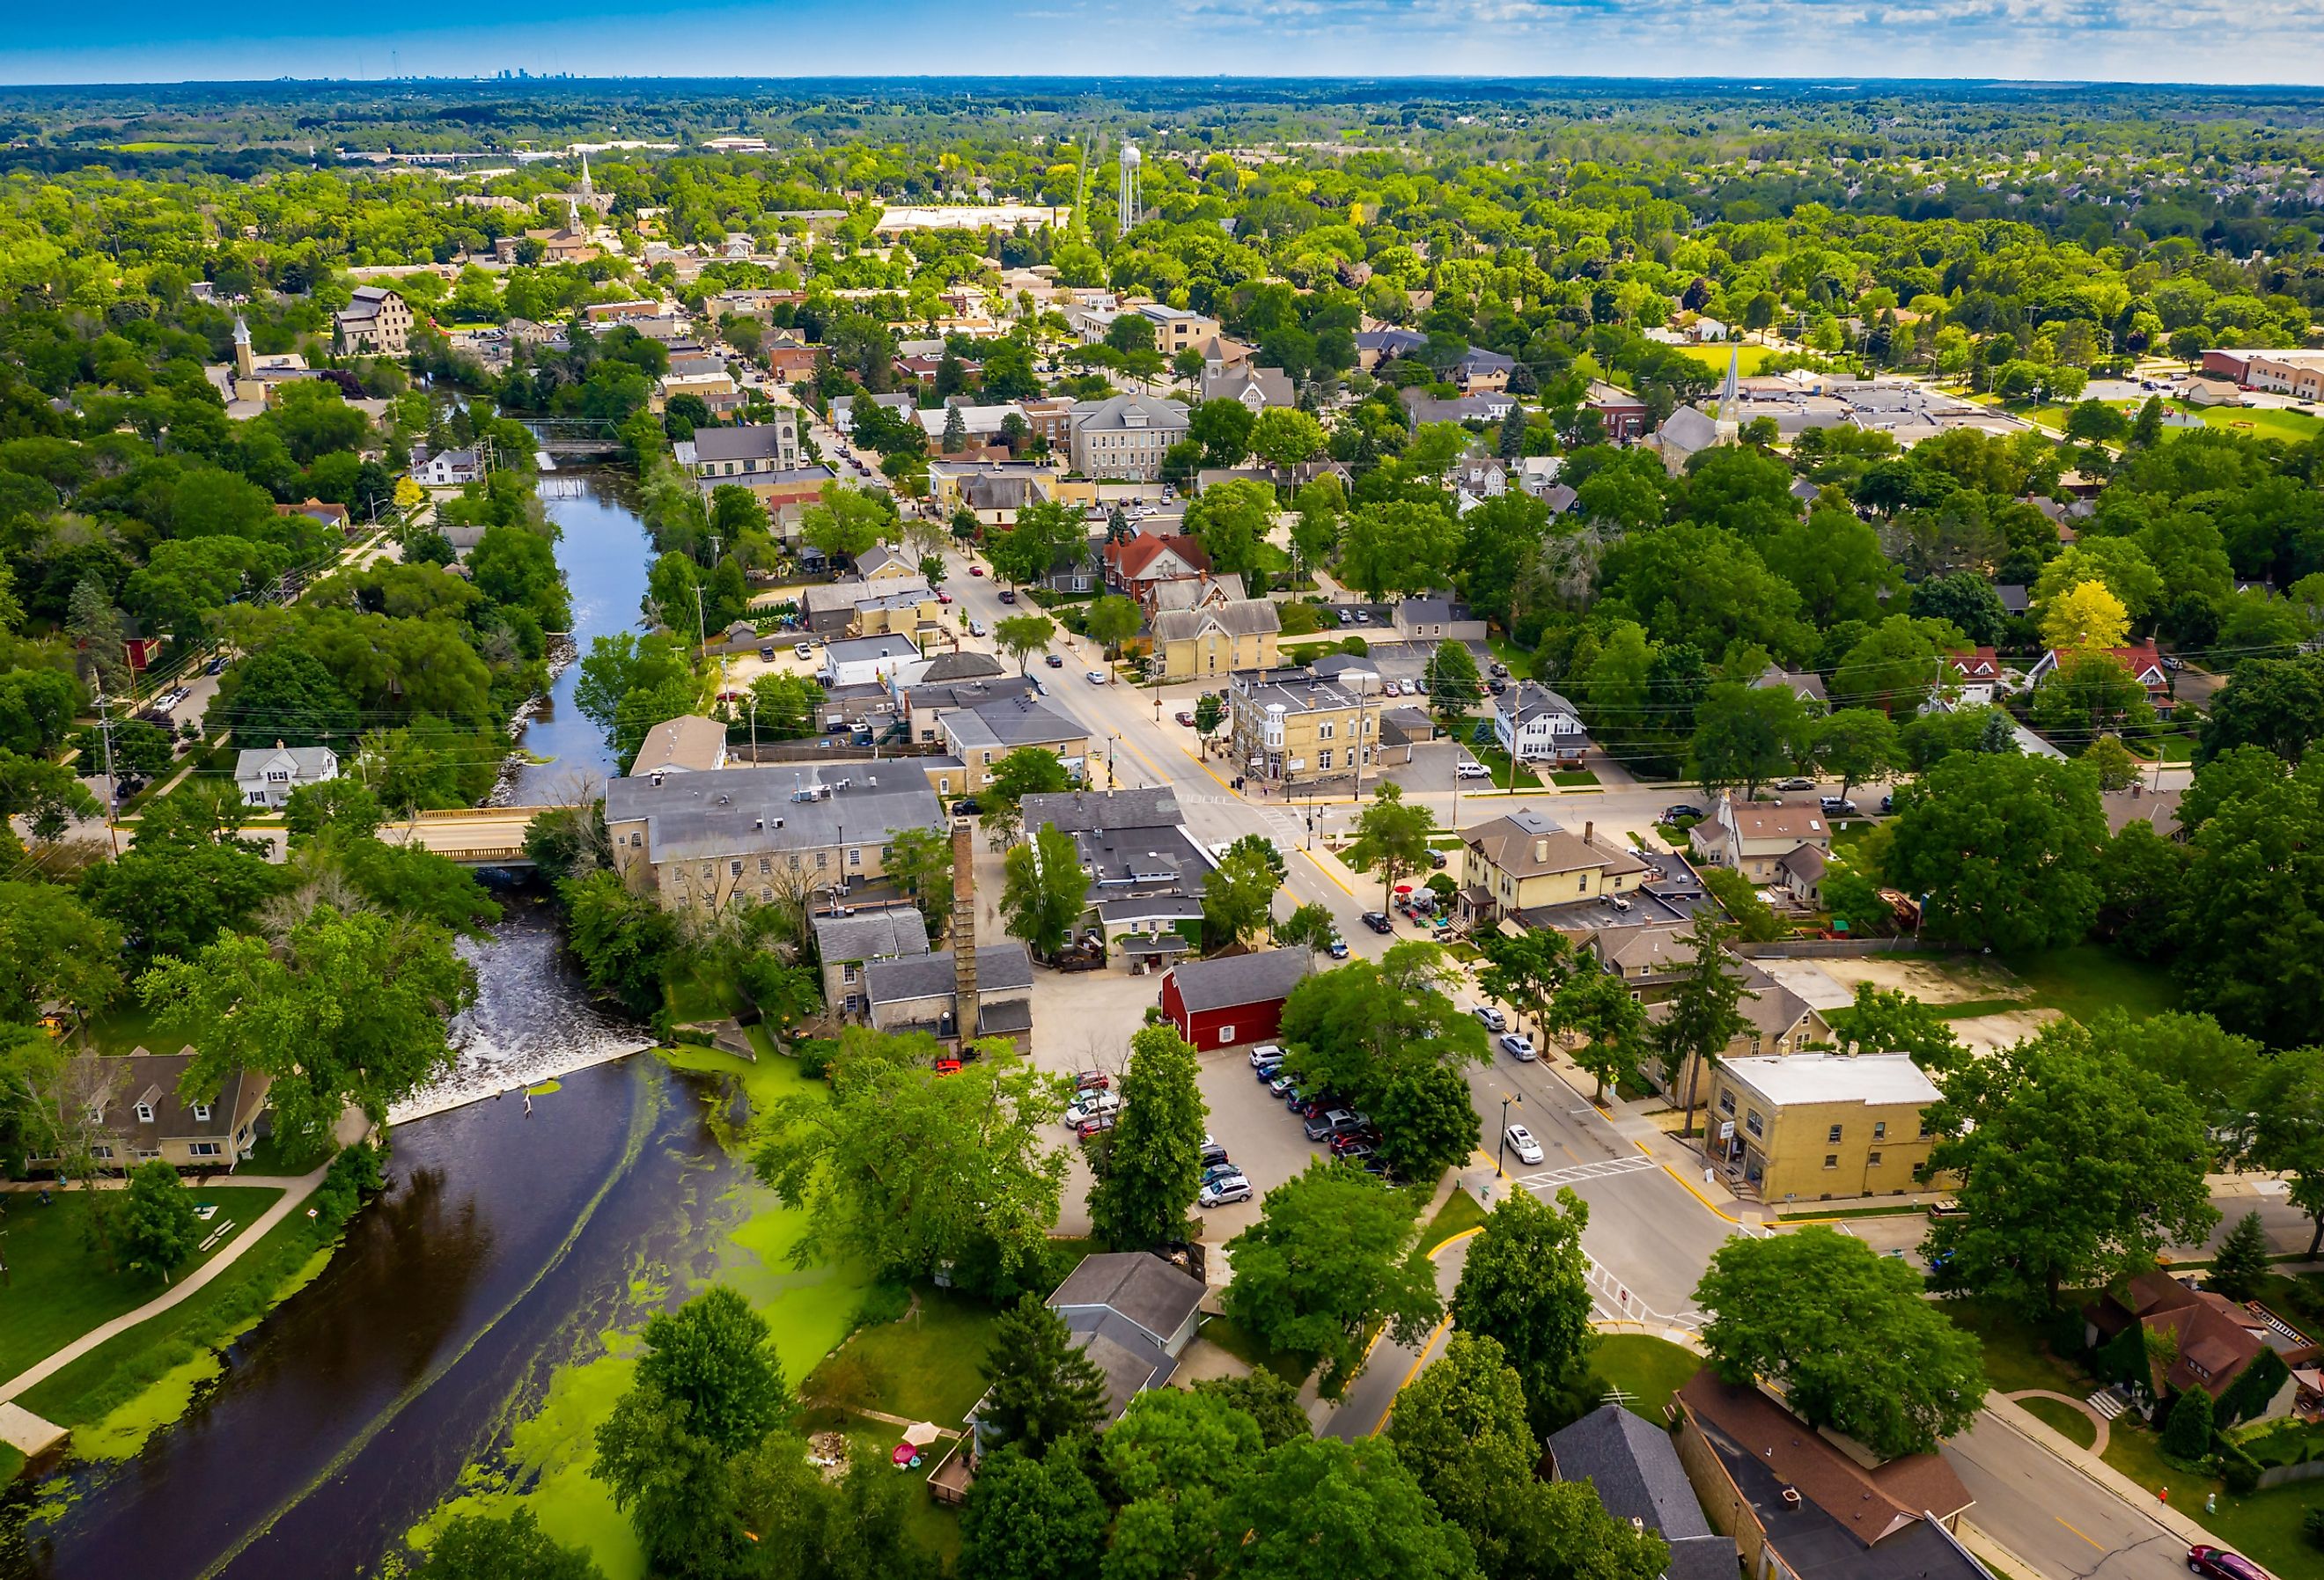 Aerial view of downtown Cedarburg, Wisconsin.